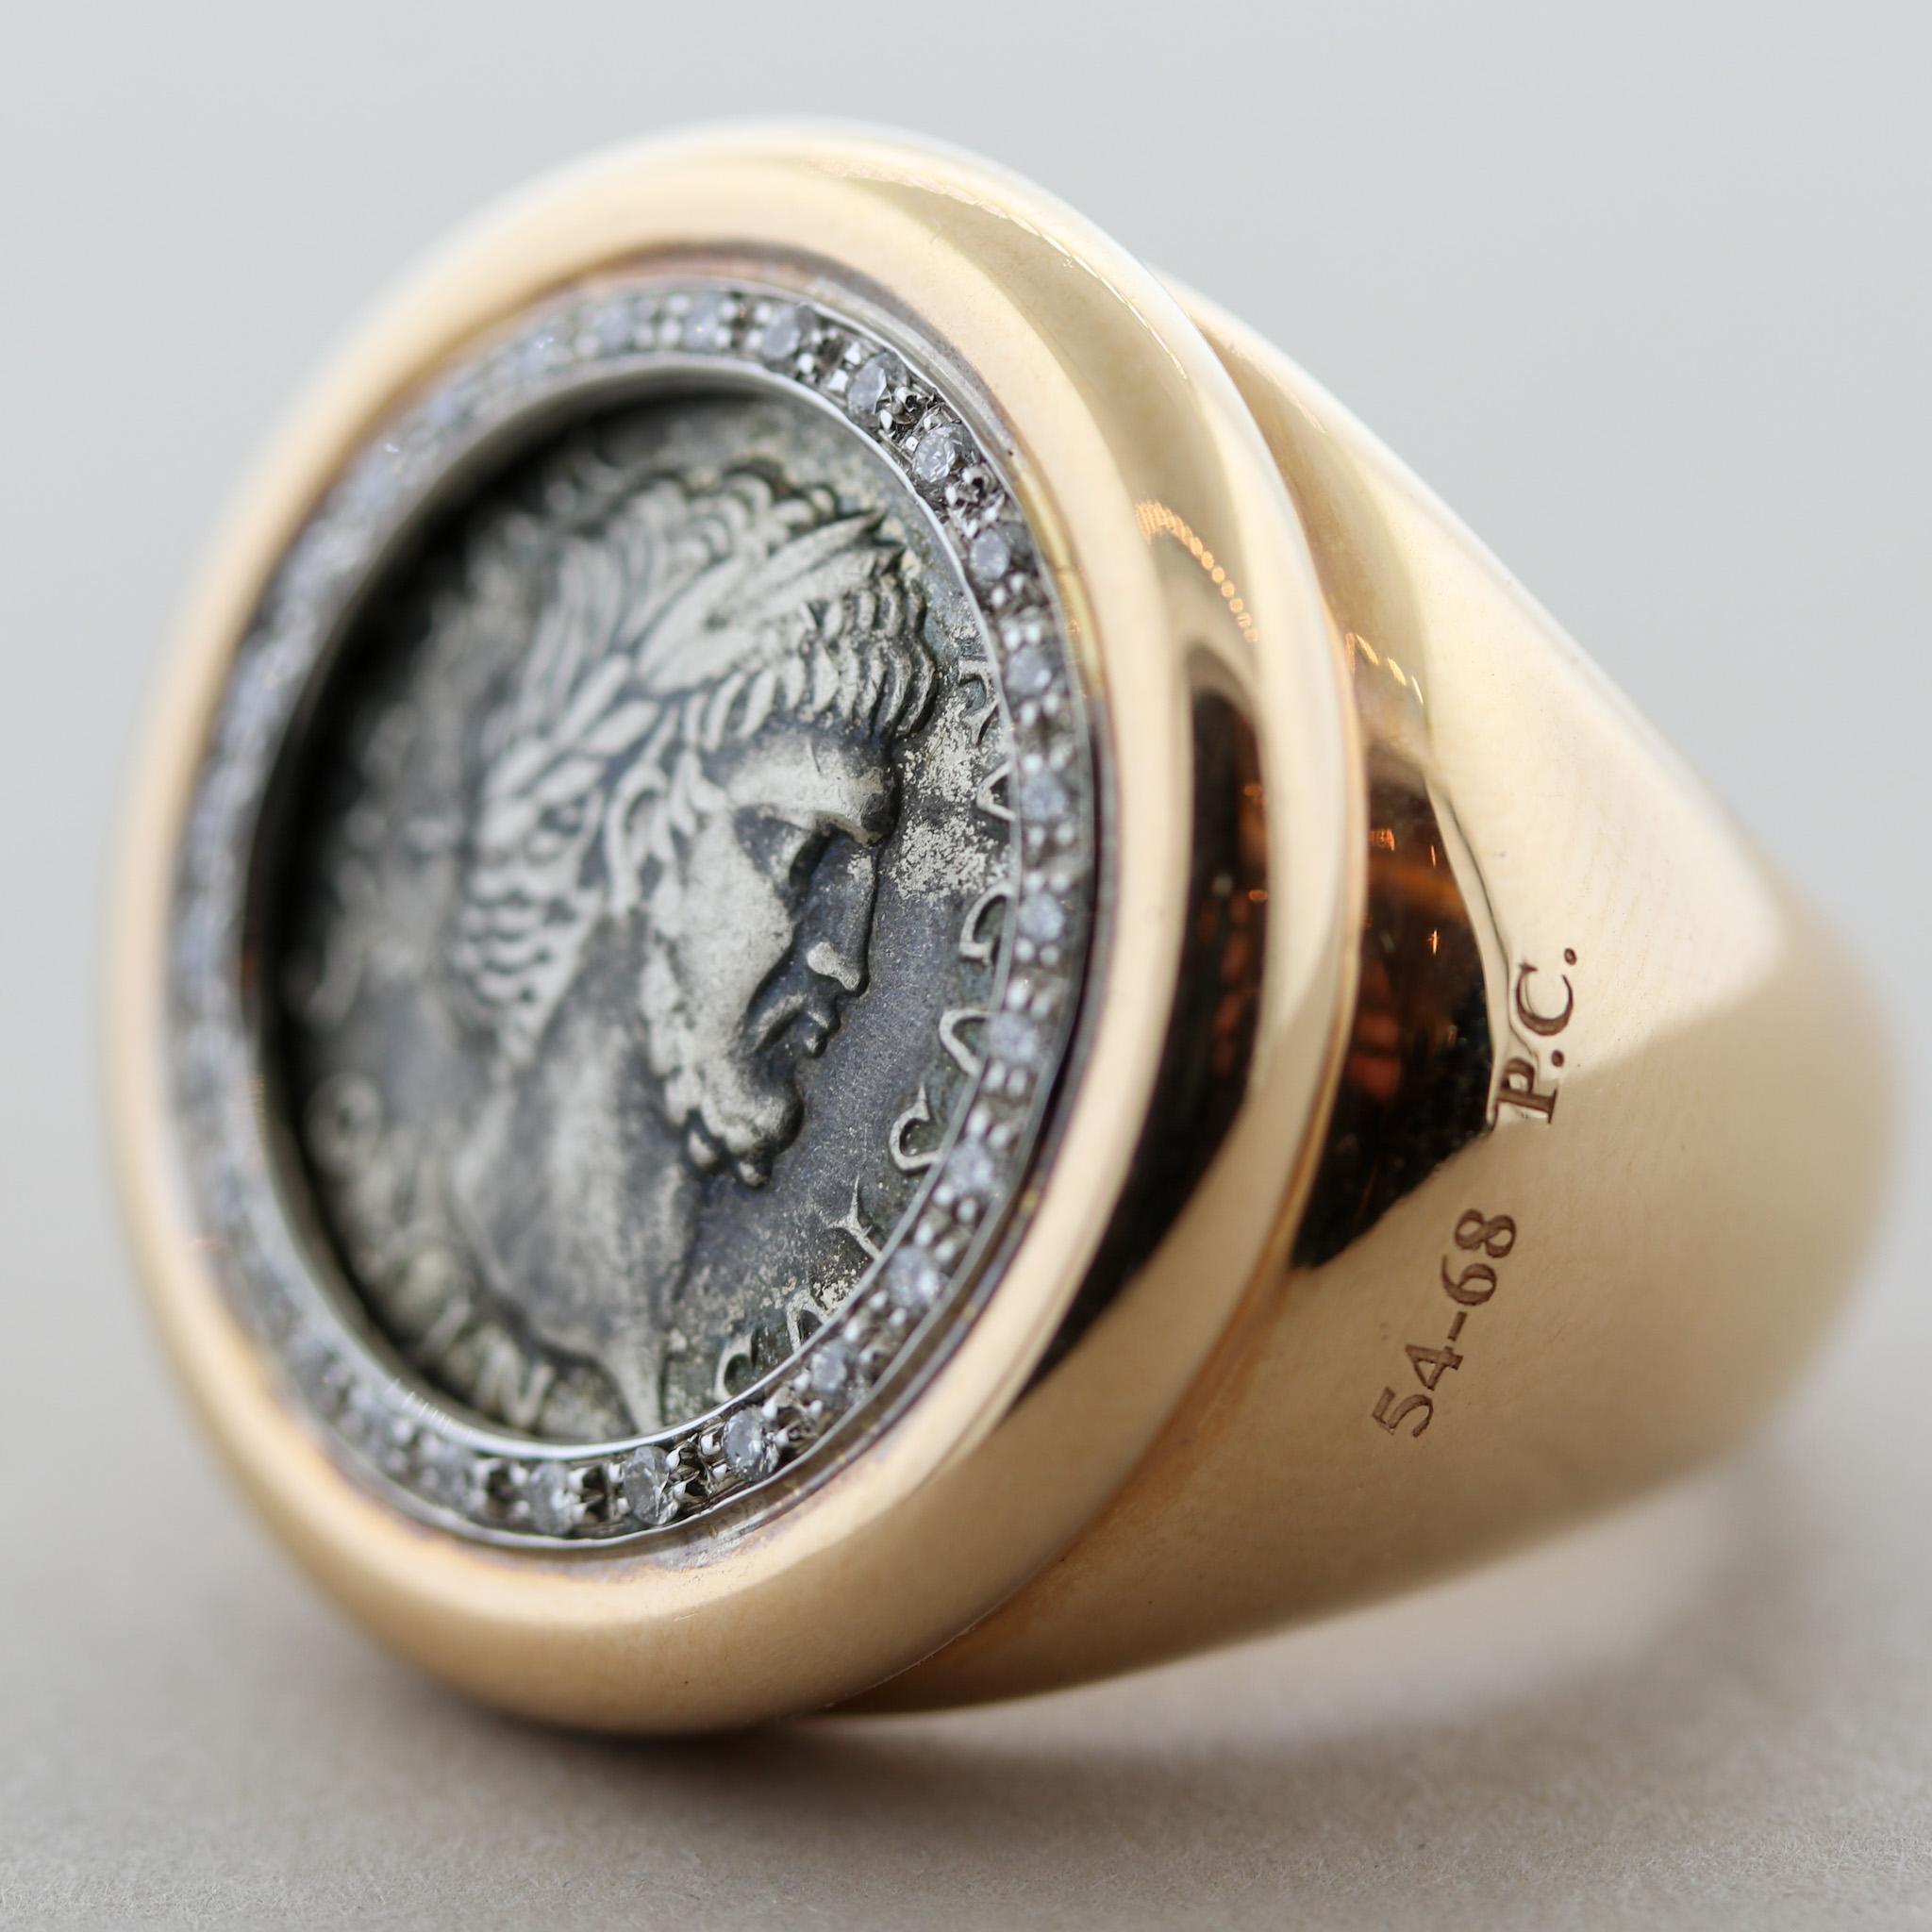 irishman ring for sale